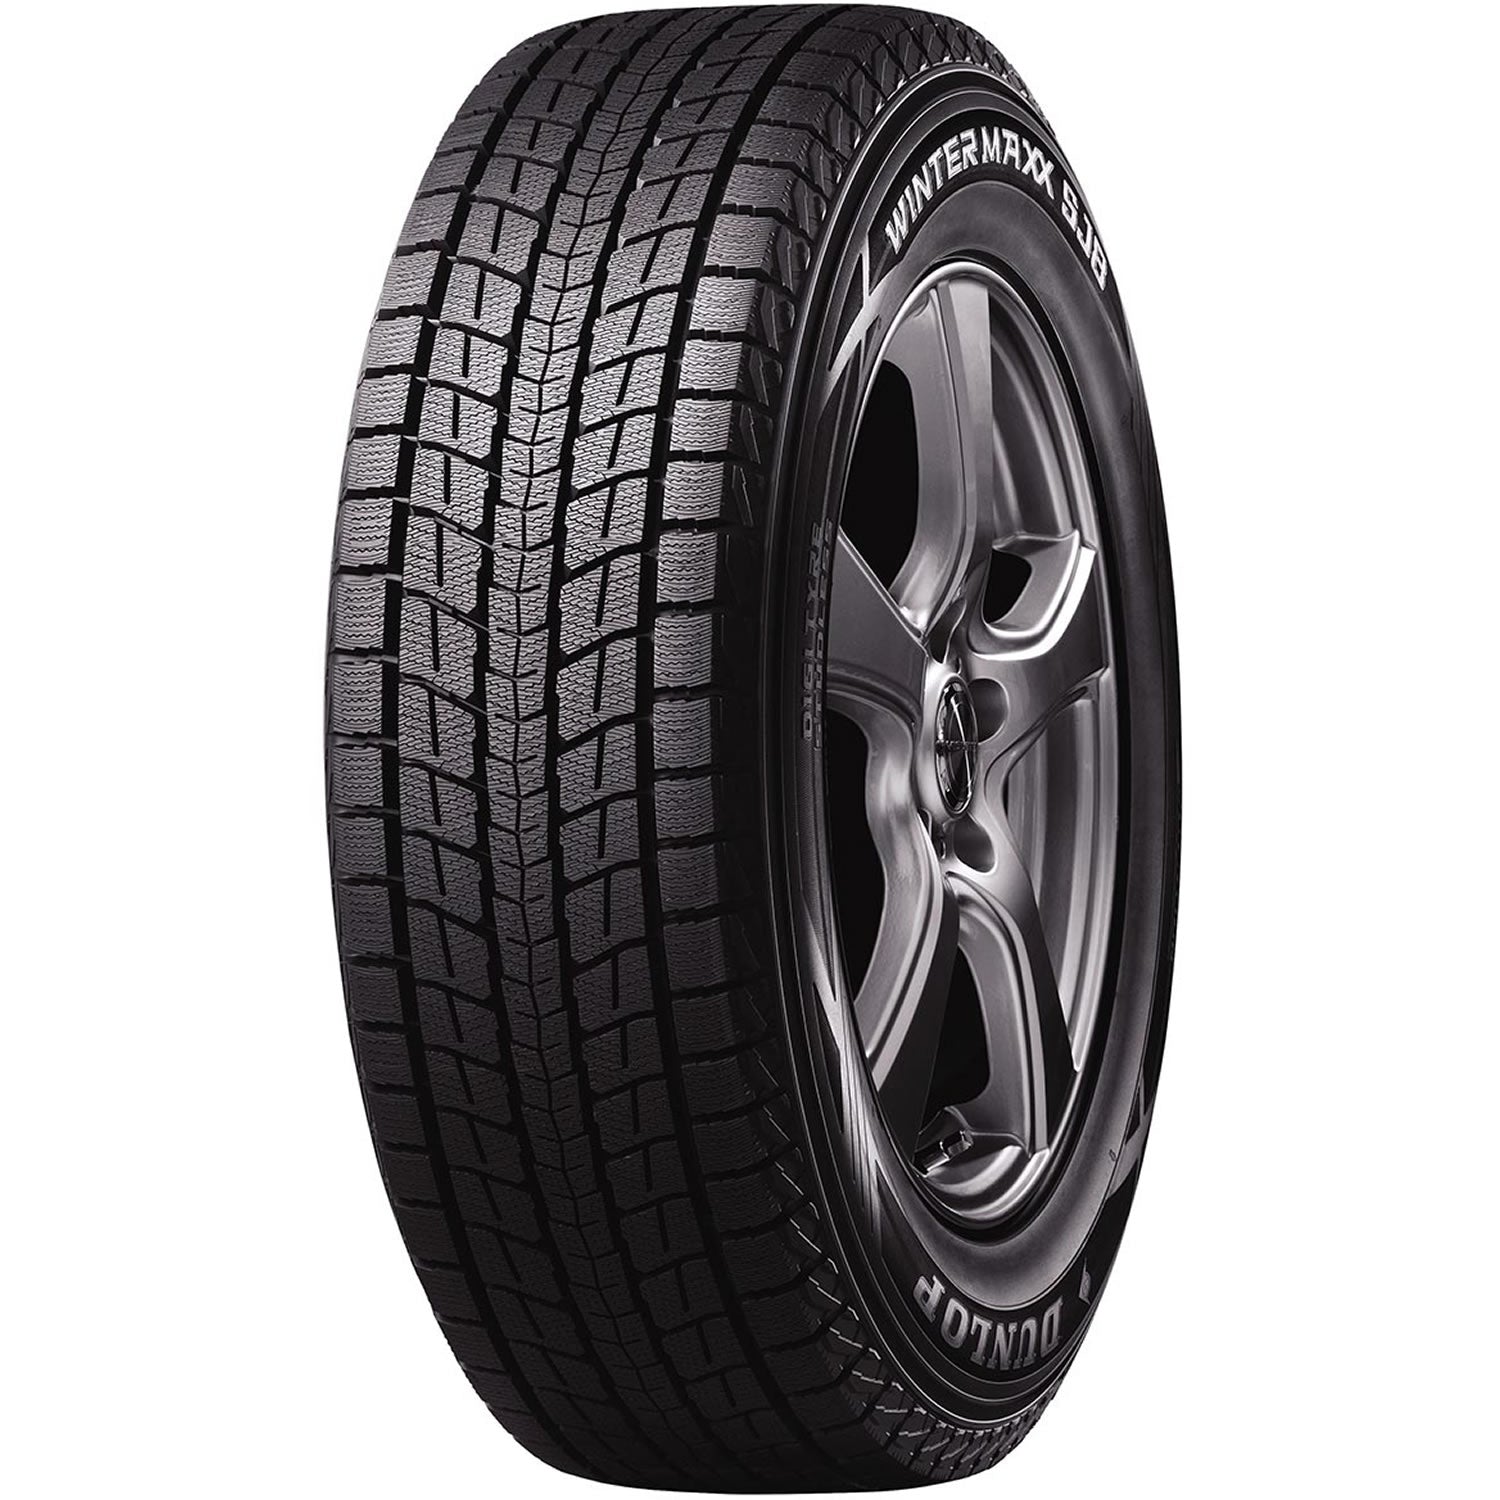 DUNLOP WINTER MAXX SJ8 235/60R17 (28.1X9.3R 17) Tires